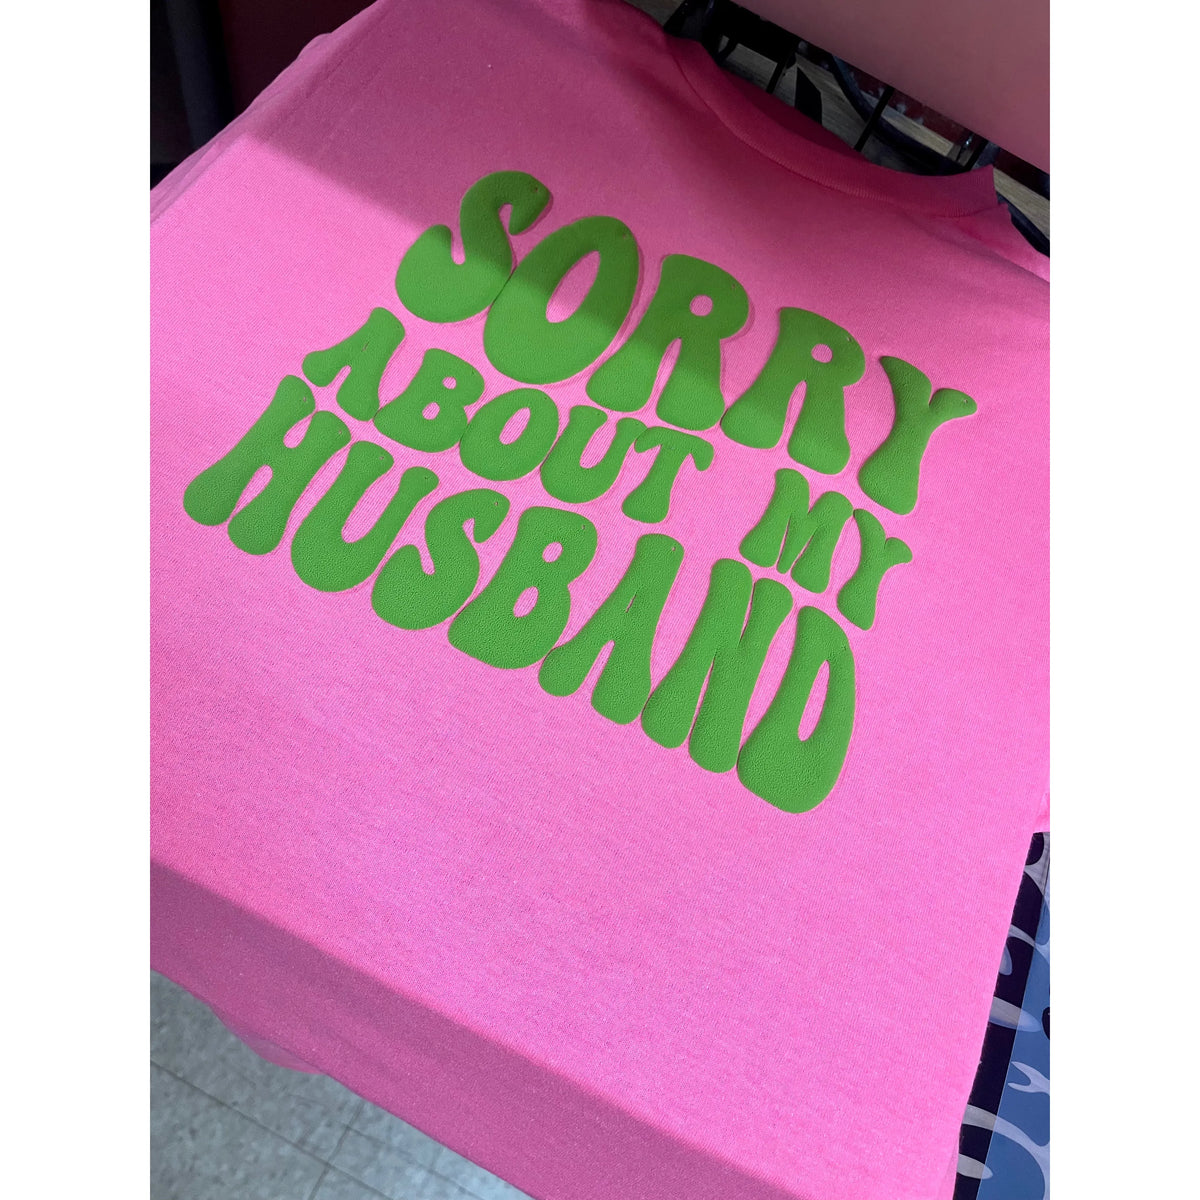 Sorry About My Husband Tee or Sweatshirt